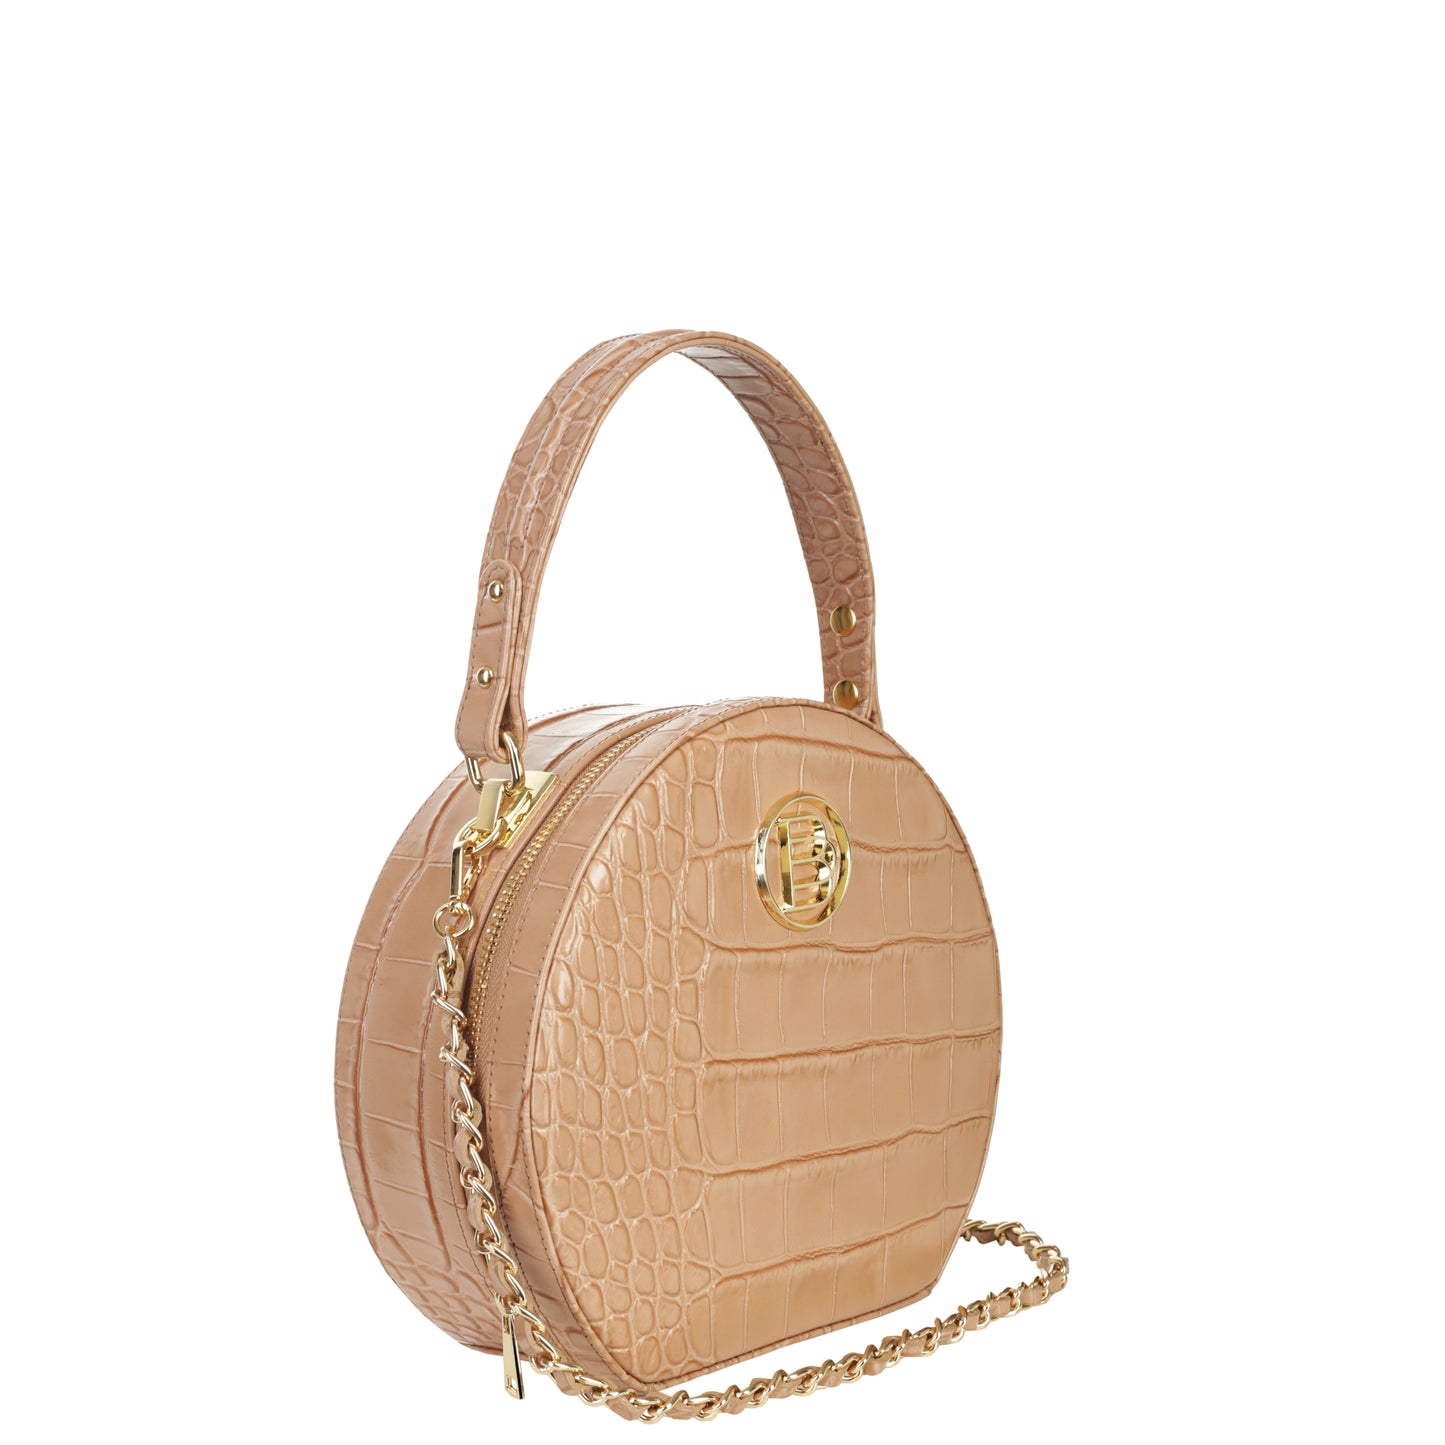 AVILA croco camel women's leather handbag